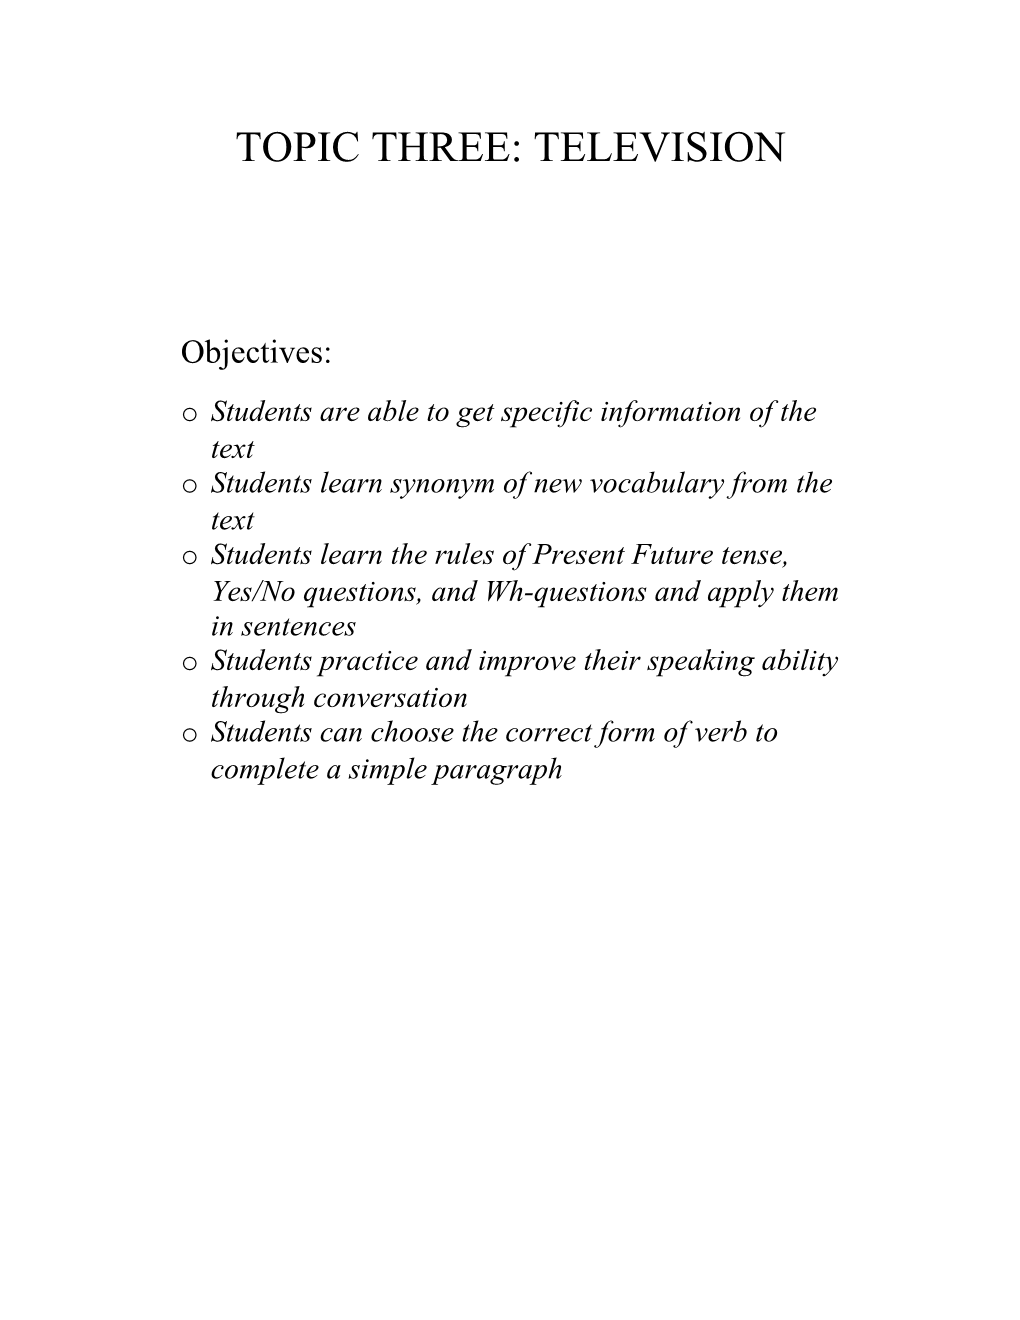 Topic Three: Television